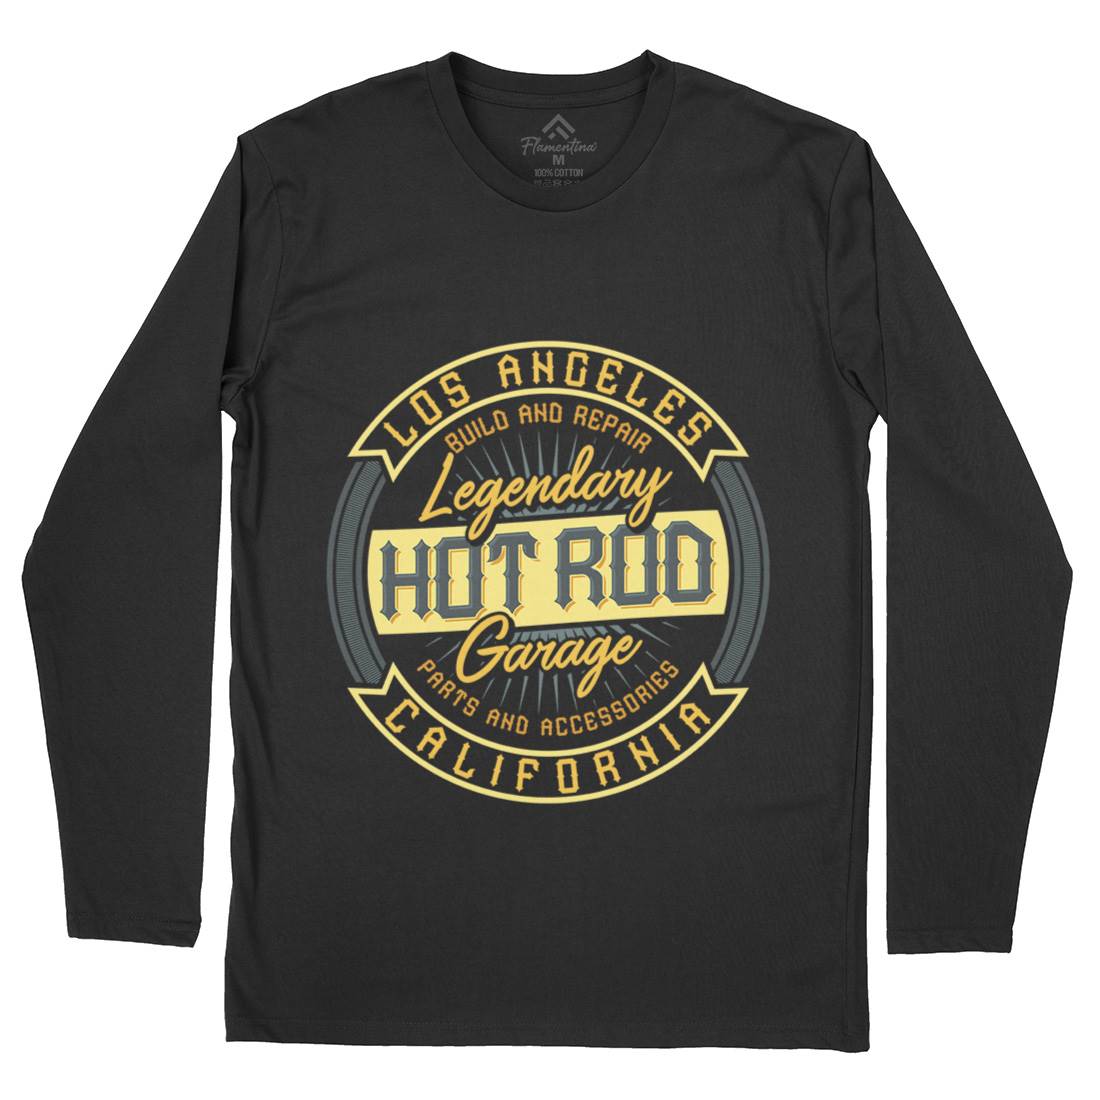 Hot Rod Mens Long Sleeve T-Shirt Cars B306